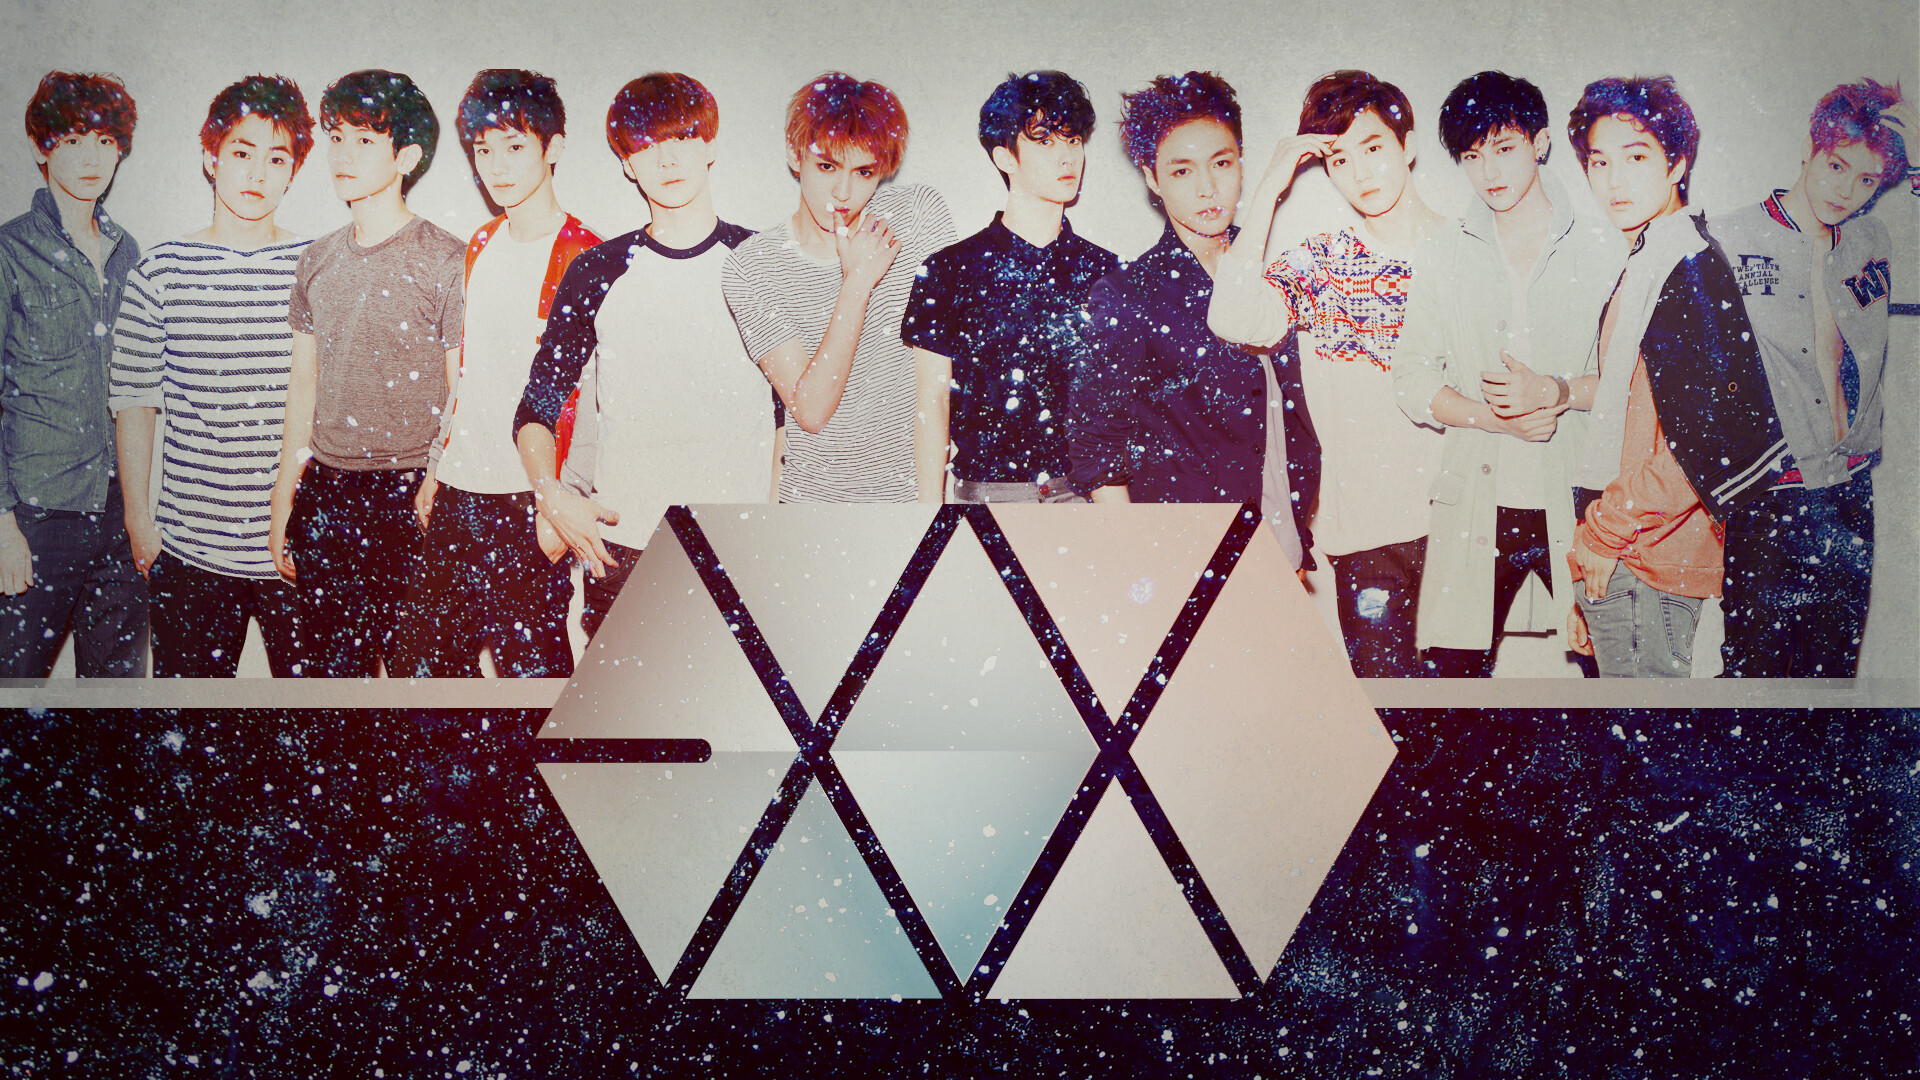 EXO: The band's first studio album XOXO was released alongside breakthrough single "Growl". 1920x1080 Full HD Wallpaper.